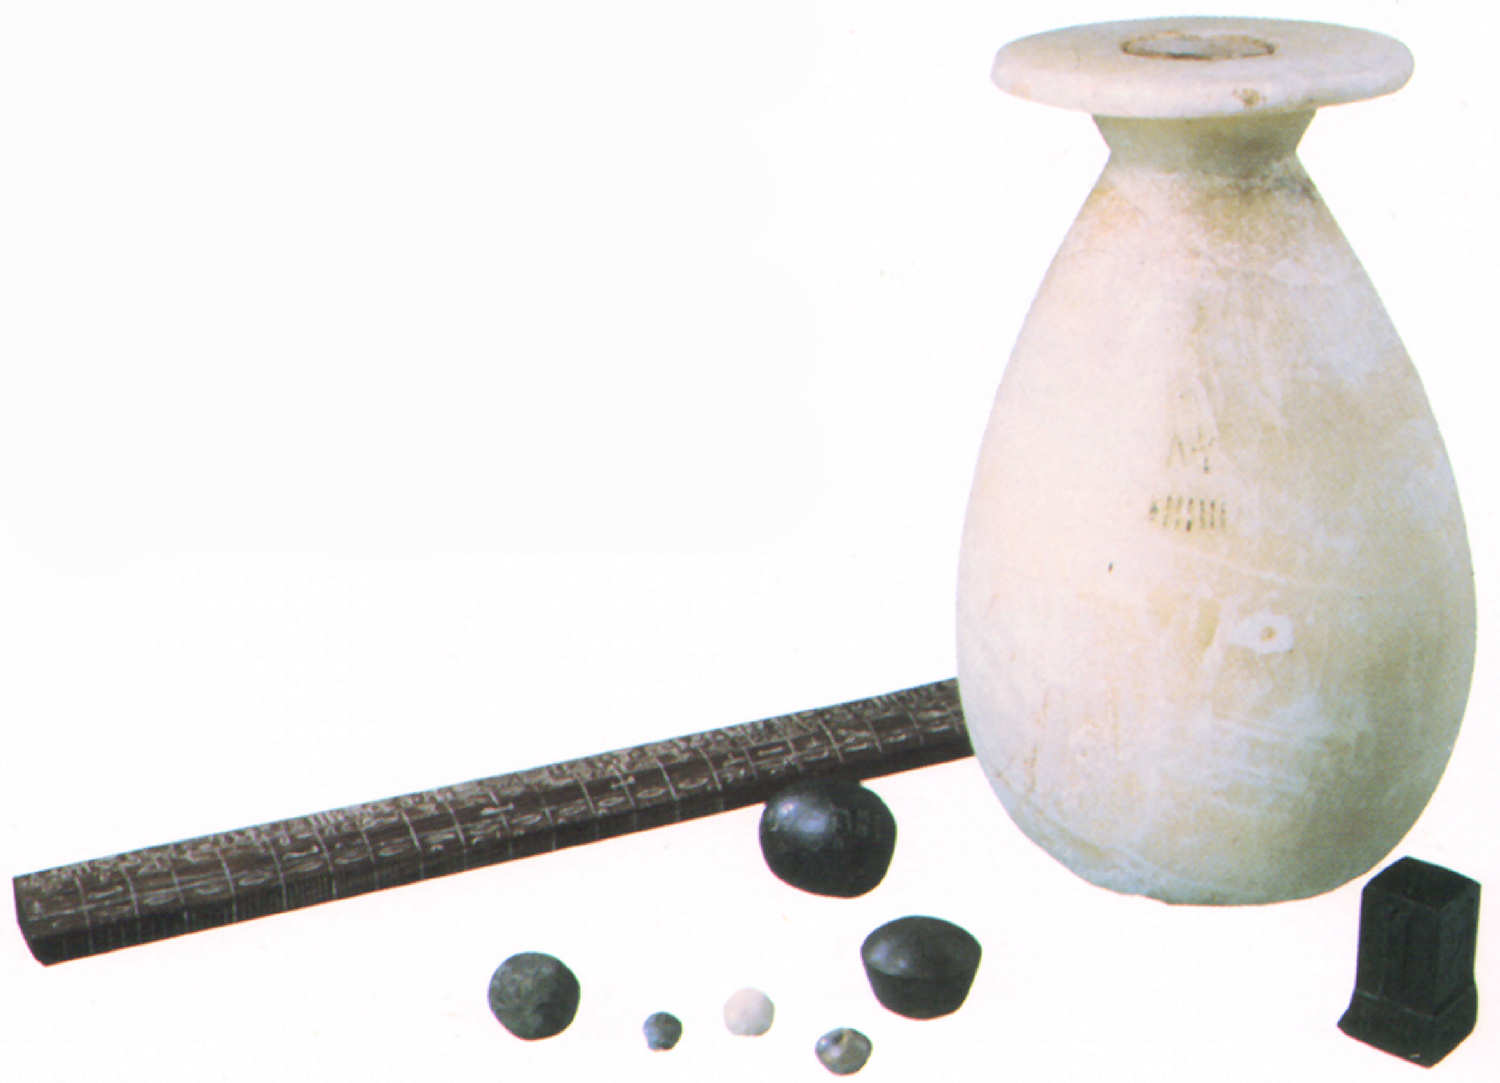 instrumentos medida antiguo egipto gnomon